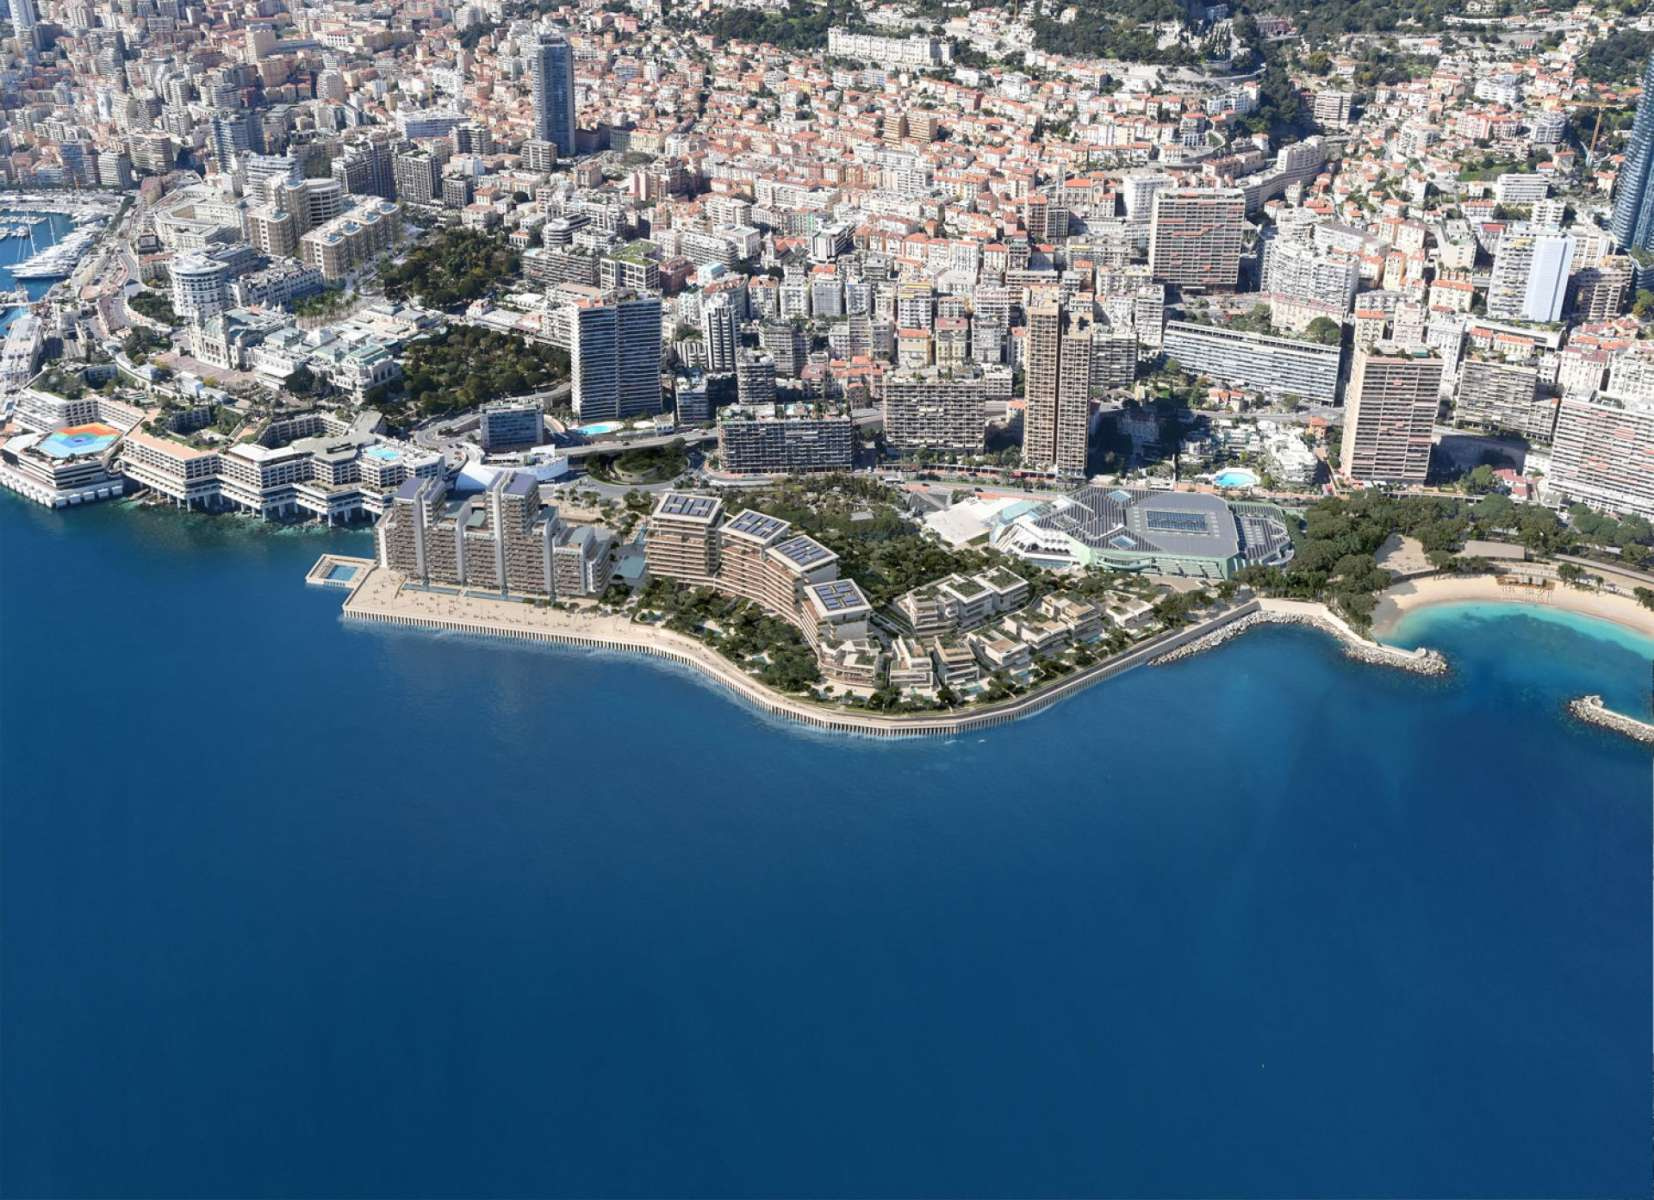 Mareterra Monaco - A New Era of Luxury Coastal Living